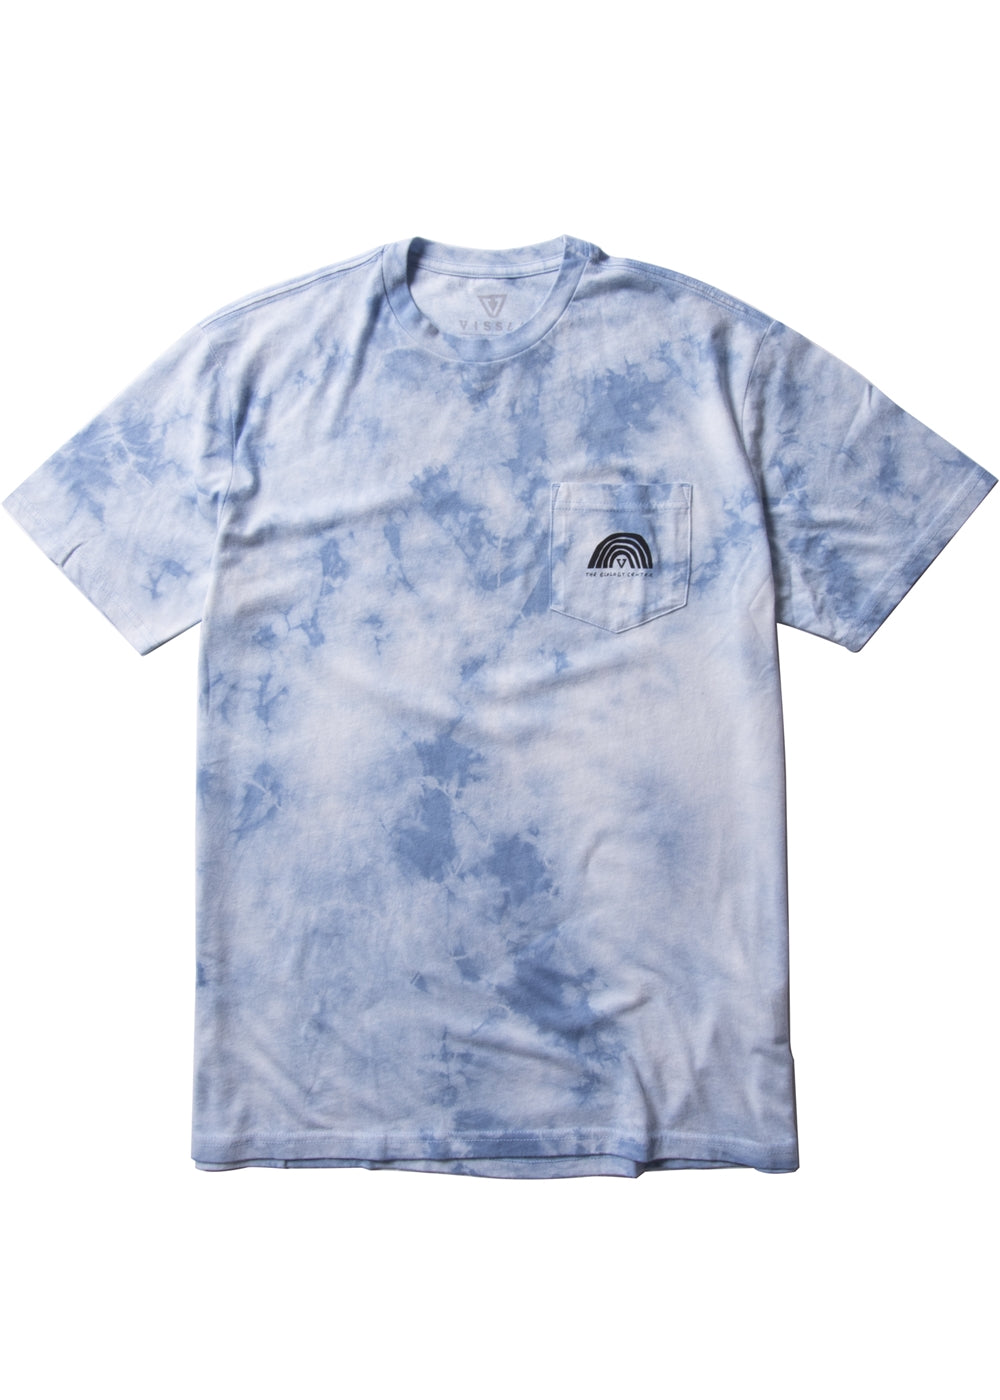 Vissla Ecology Center Rainbows Pocket Tie Dye Tee - Blue Wash Mens T Shirt